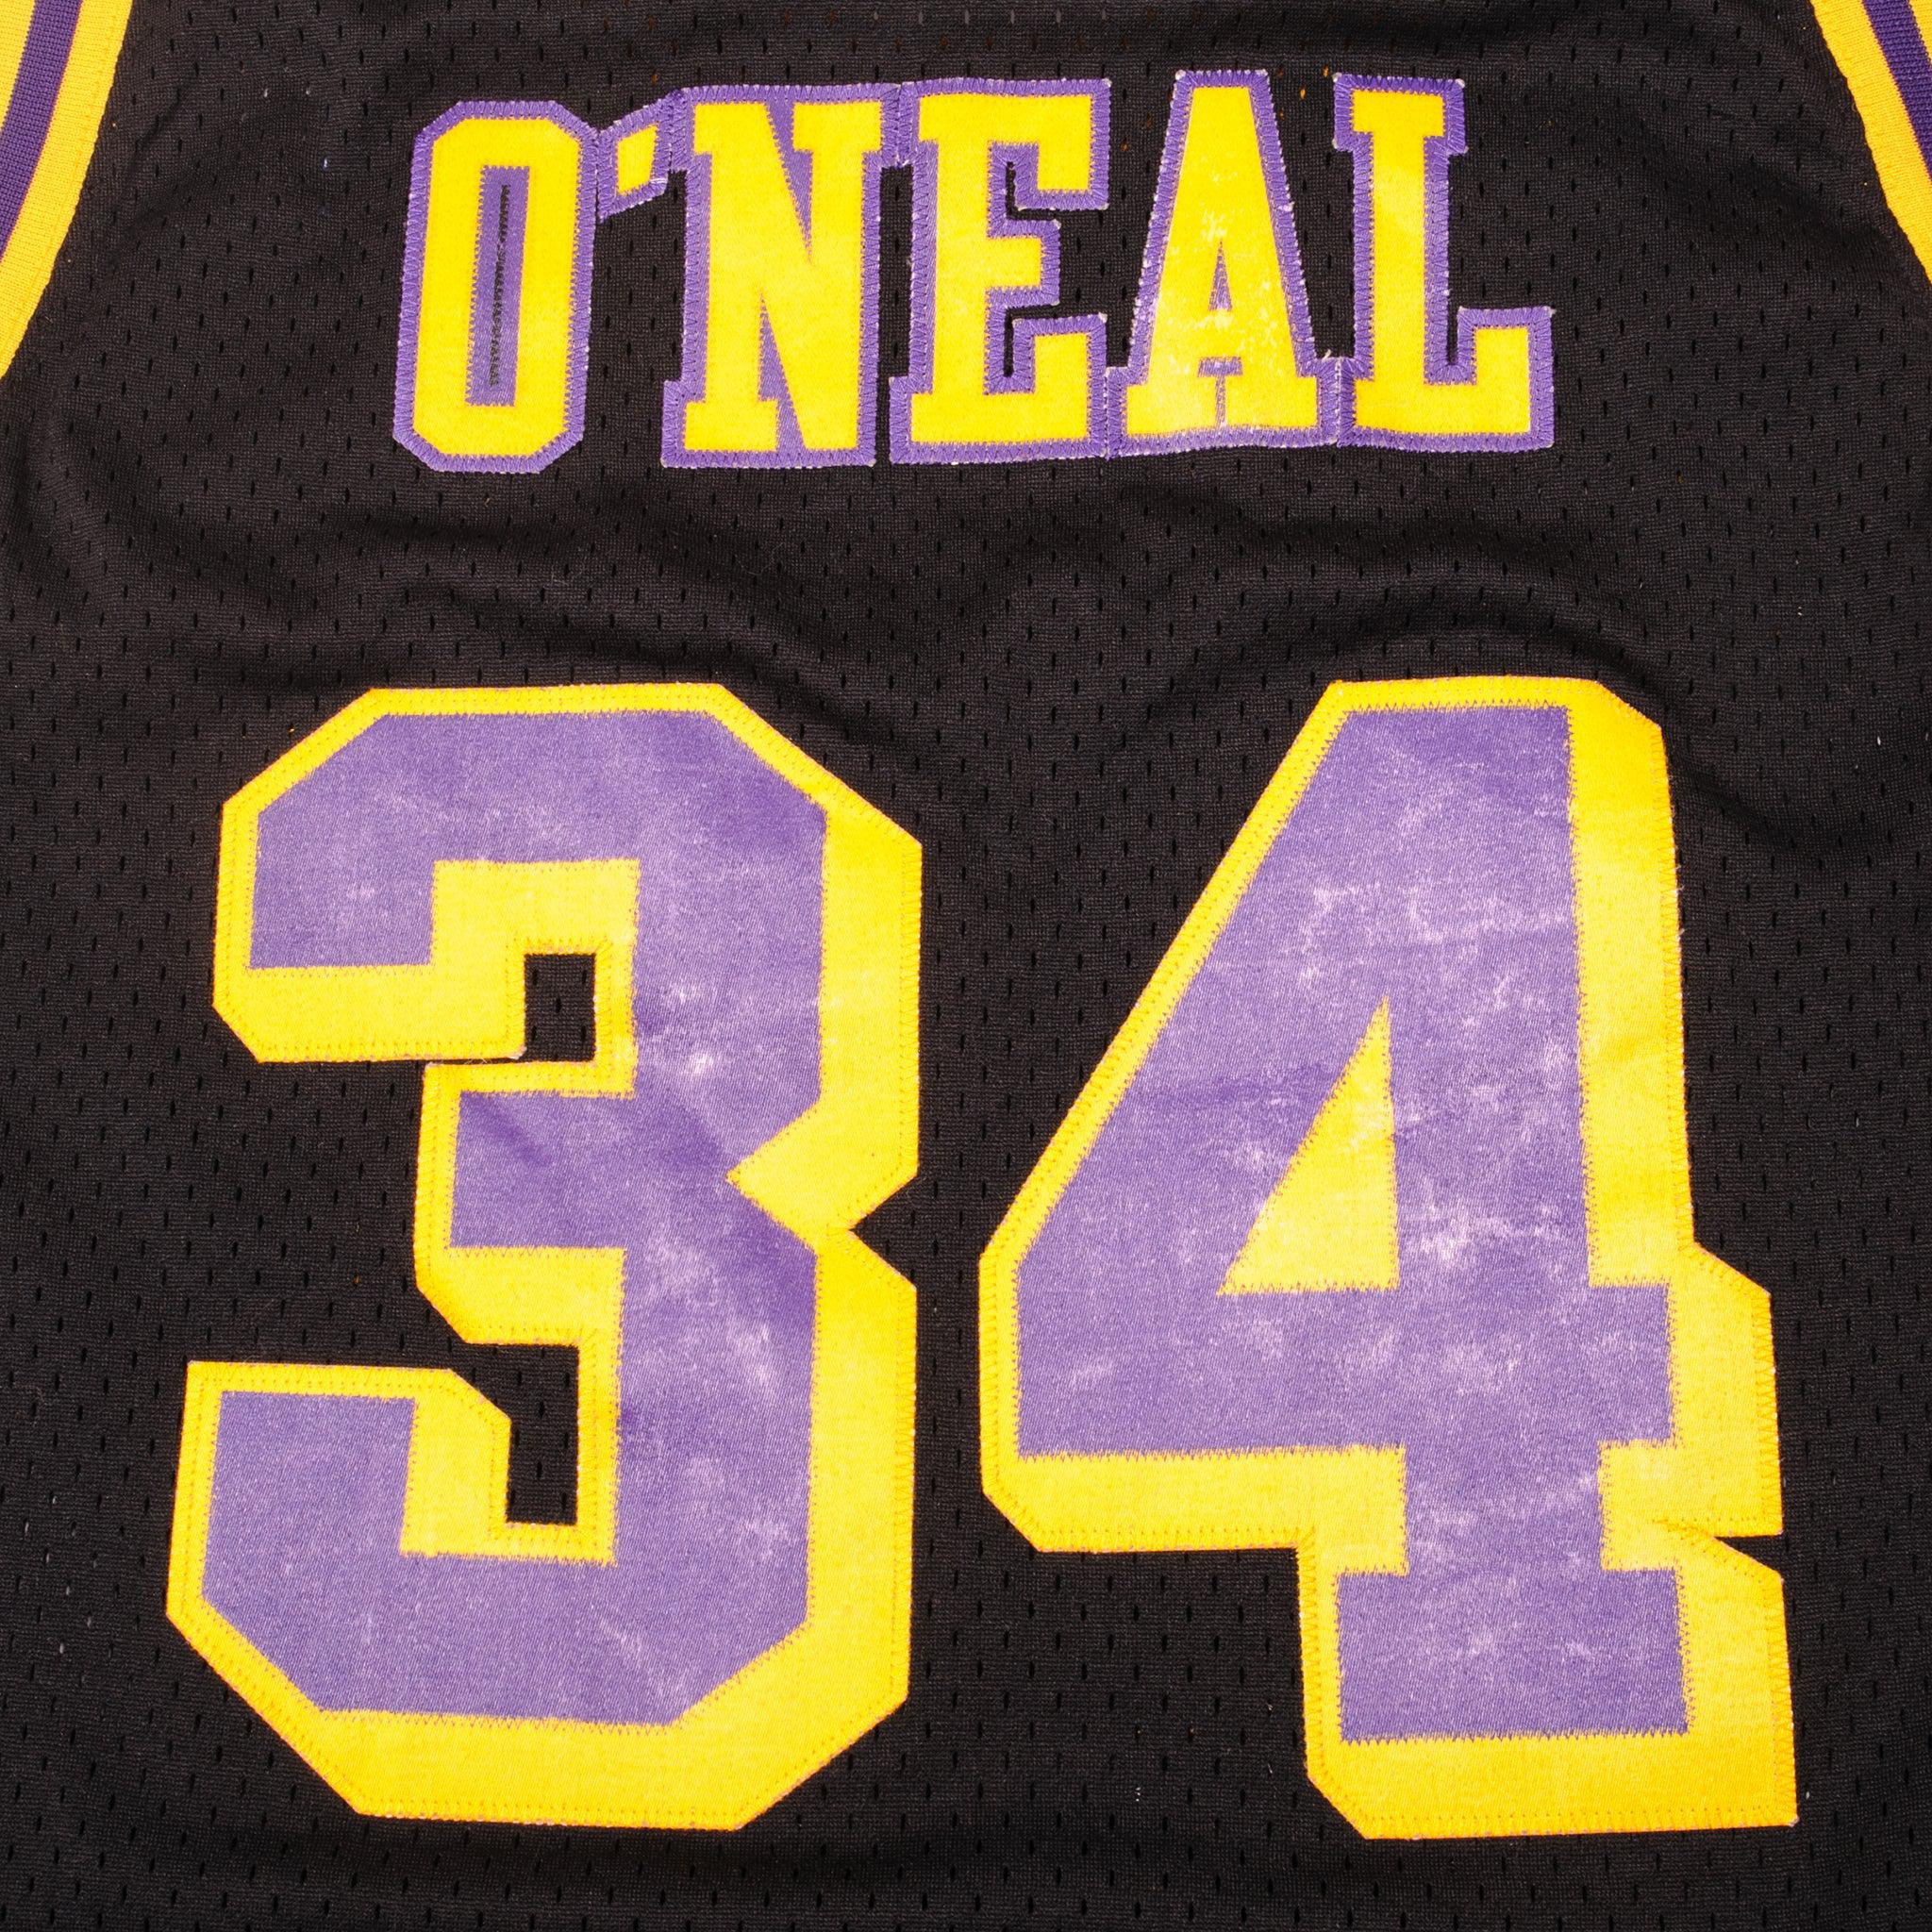 Vintage Los Angeles Lakers MPLS Shaquille O'Neal #34 Nike Swingman